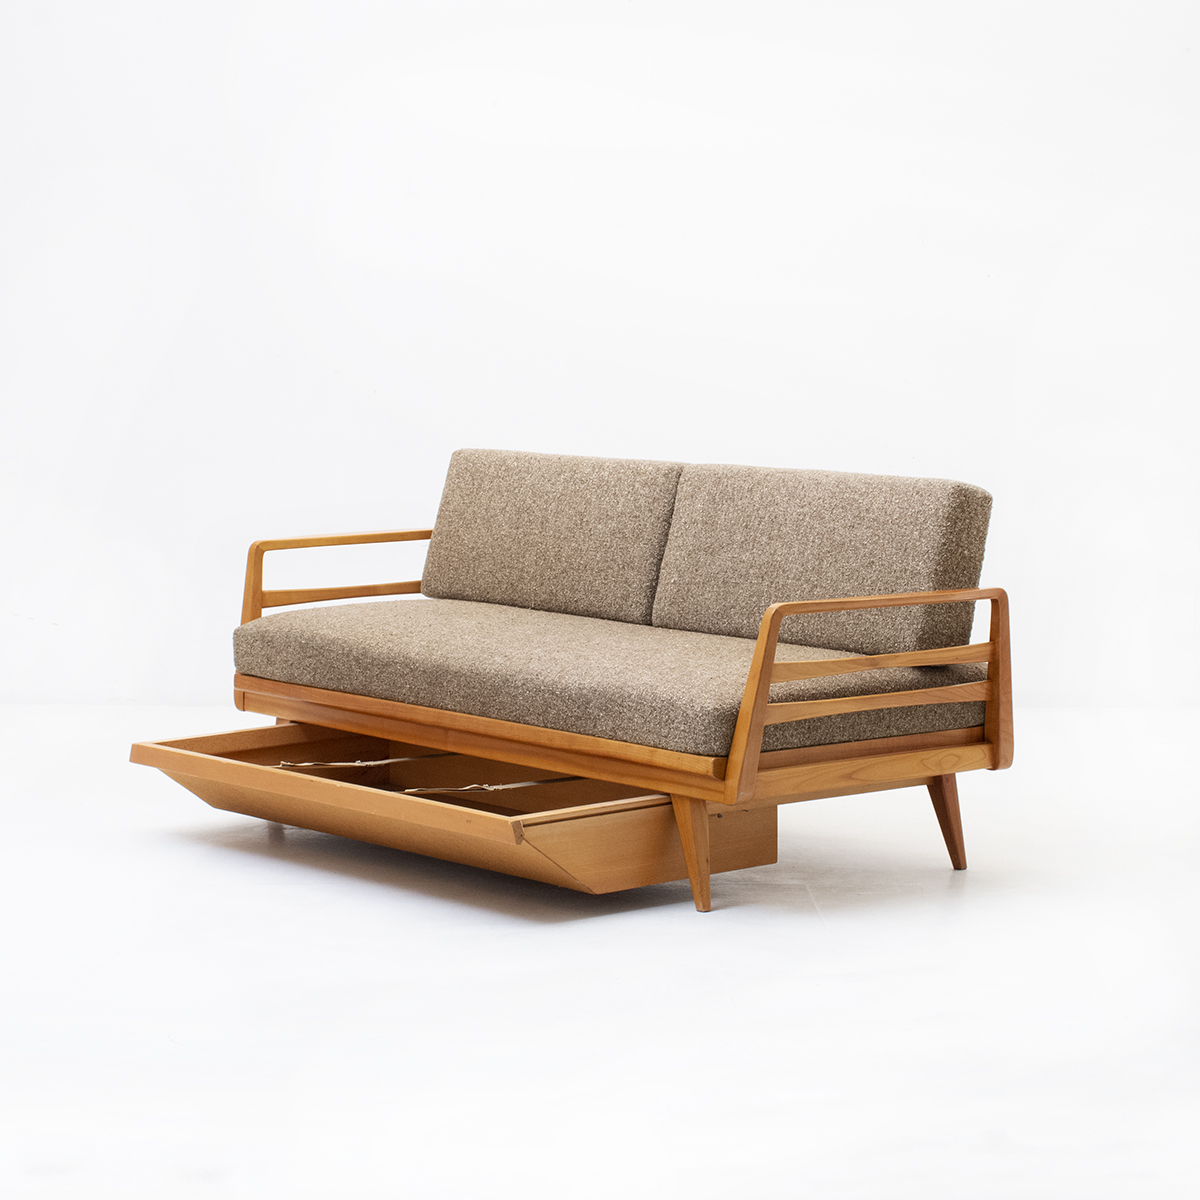 Sofa, Knoll Antimott, 1950s, 60s - 0